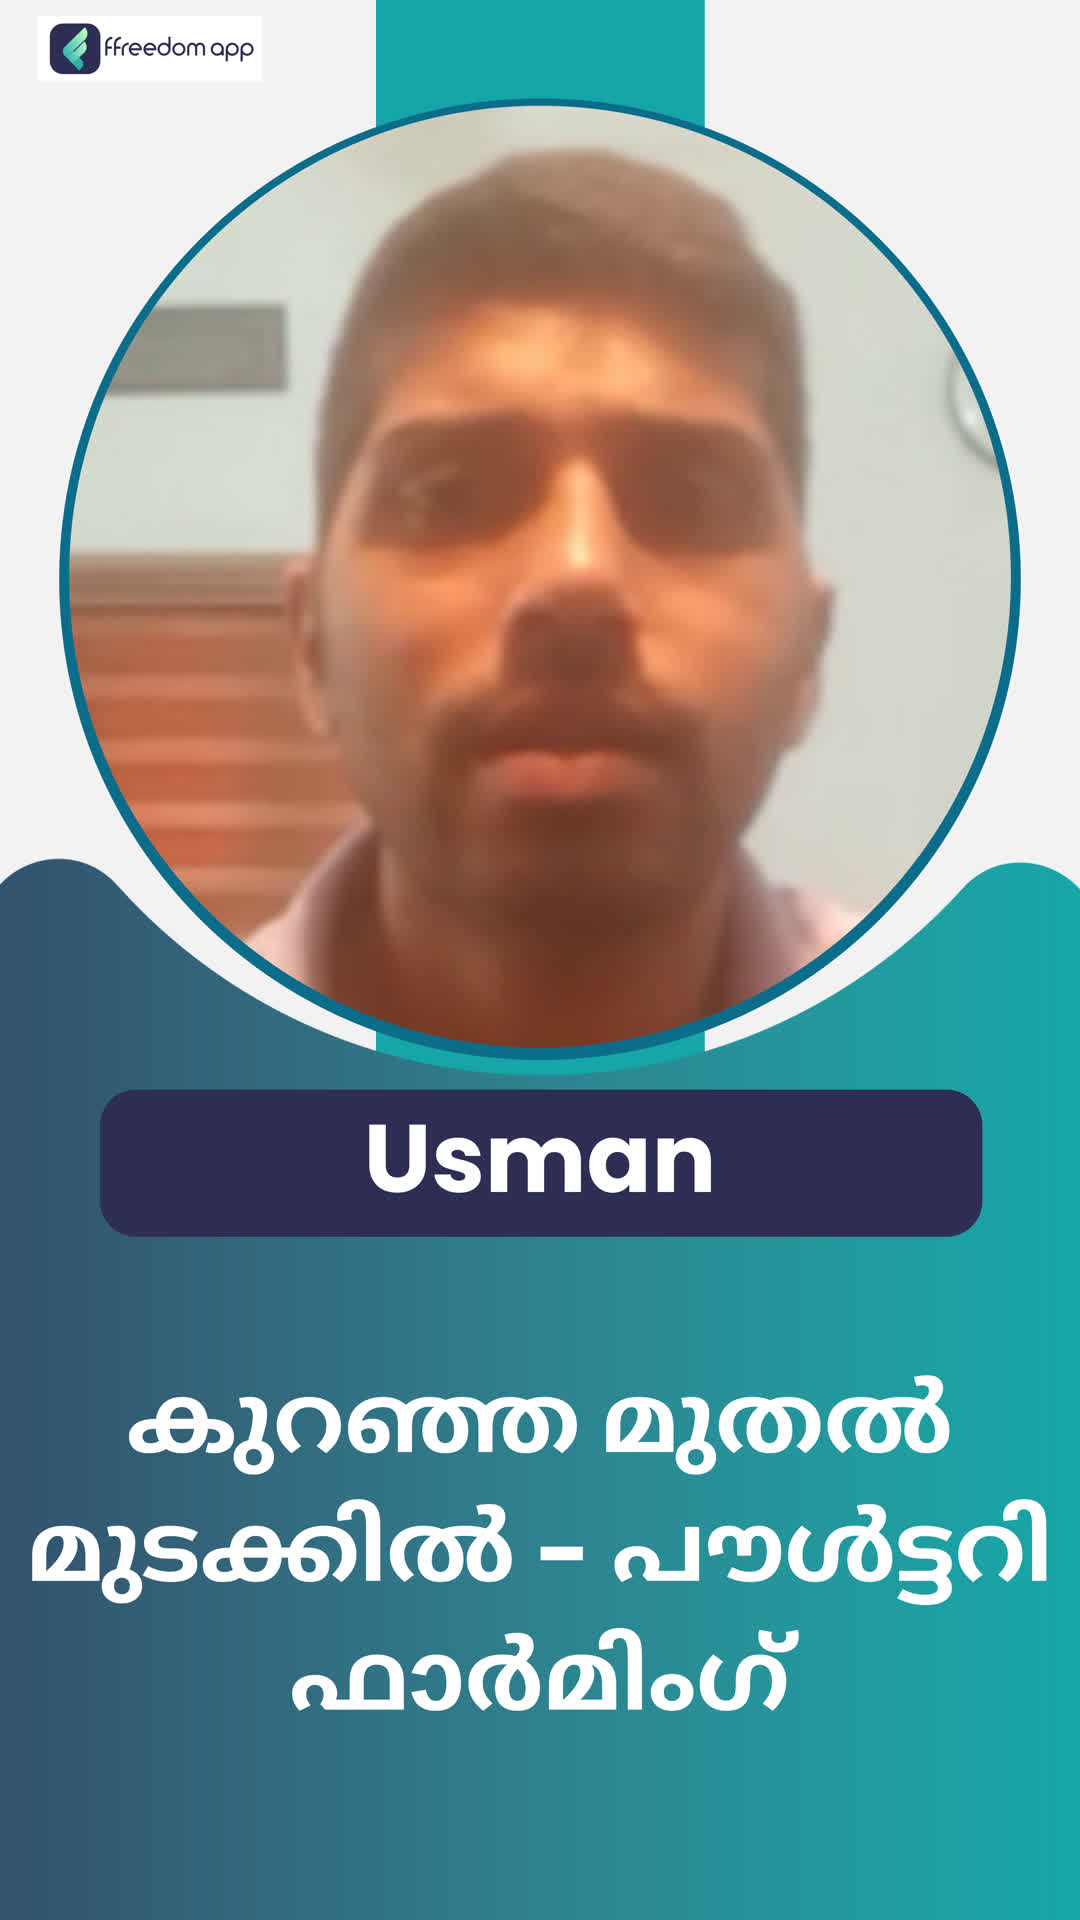 Usman's Honest Review of ffreedom app - Malappuram ,Kerala